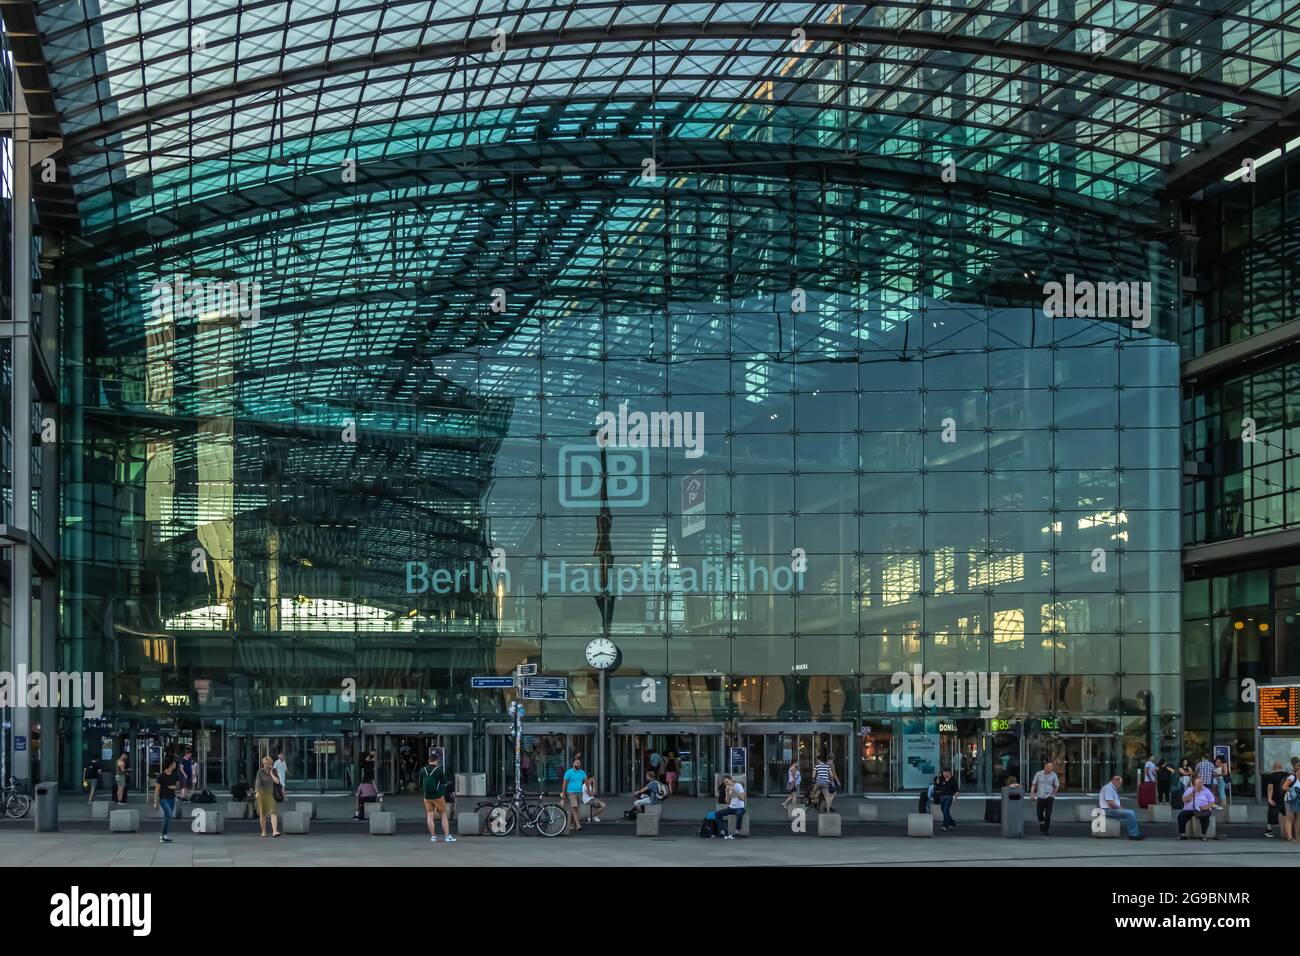 Berlin, Germany - July 25, 2019: Central train station in Berlin. Berlin - Hauptbahnhof. Modern glass architecture Stock Photo